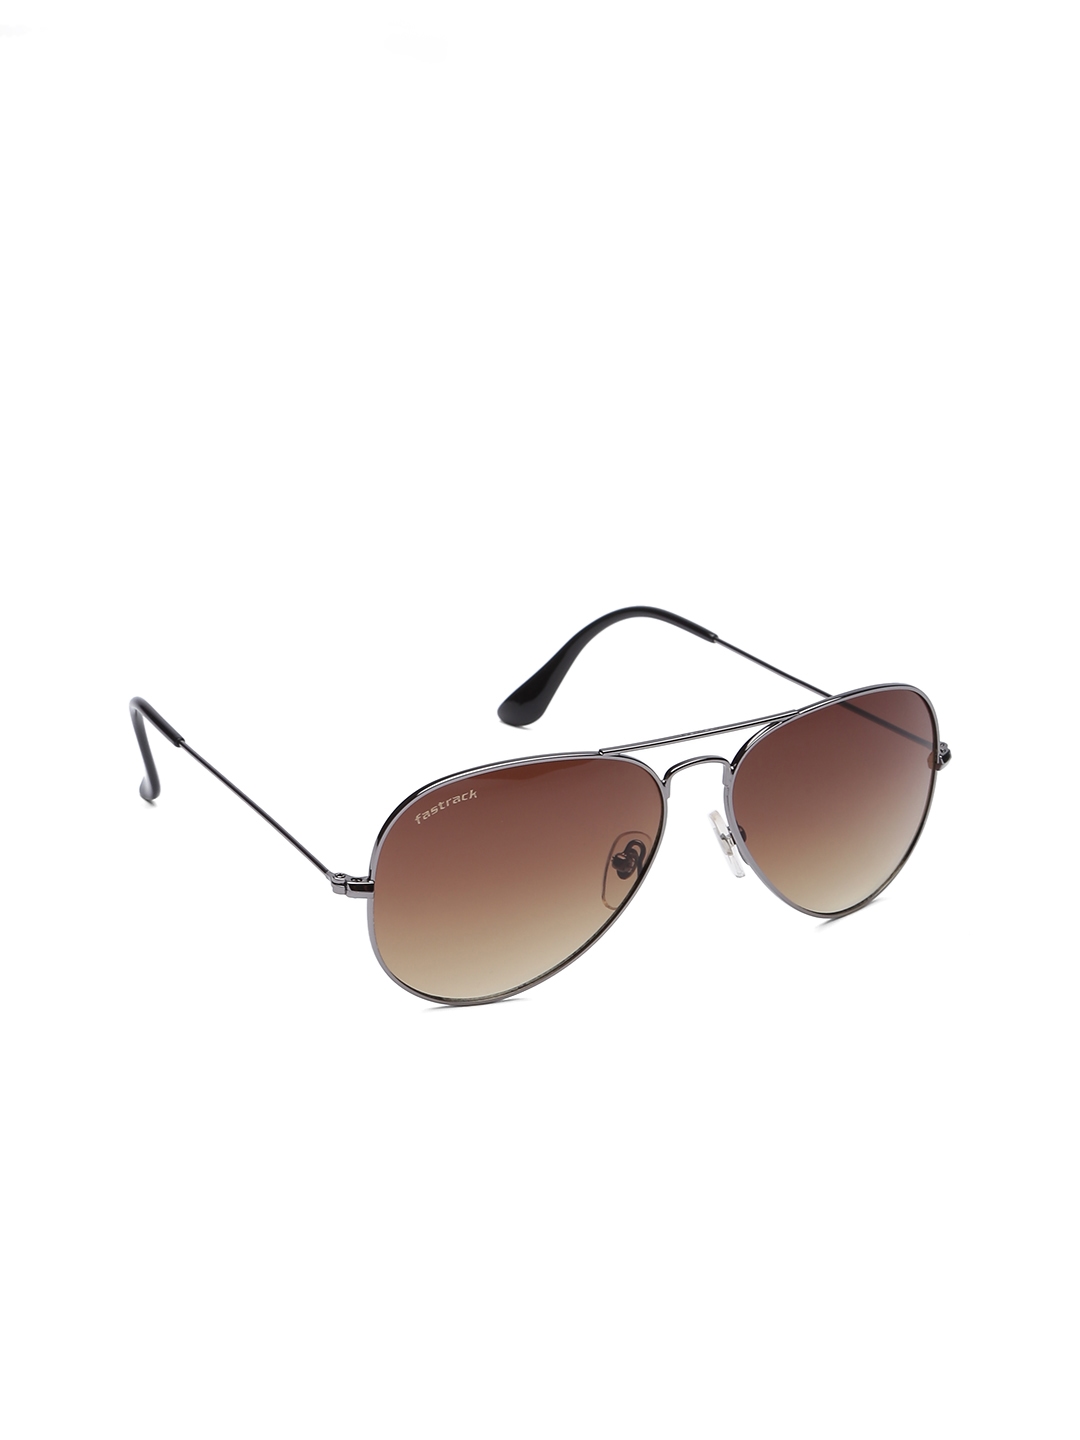 Wayfarer Rimmed Sunglasses Fastrack - P448YL4T at best price | Titan Eye+-nextbuild.com.vn